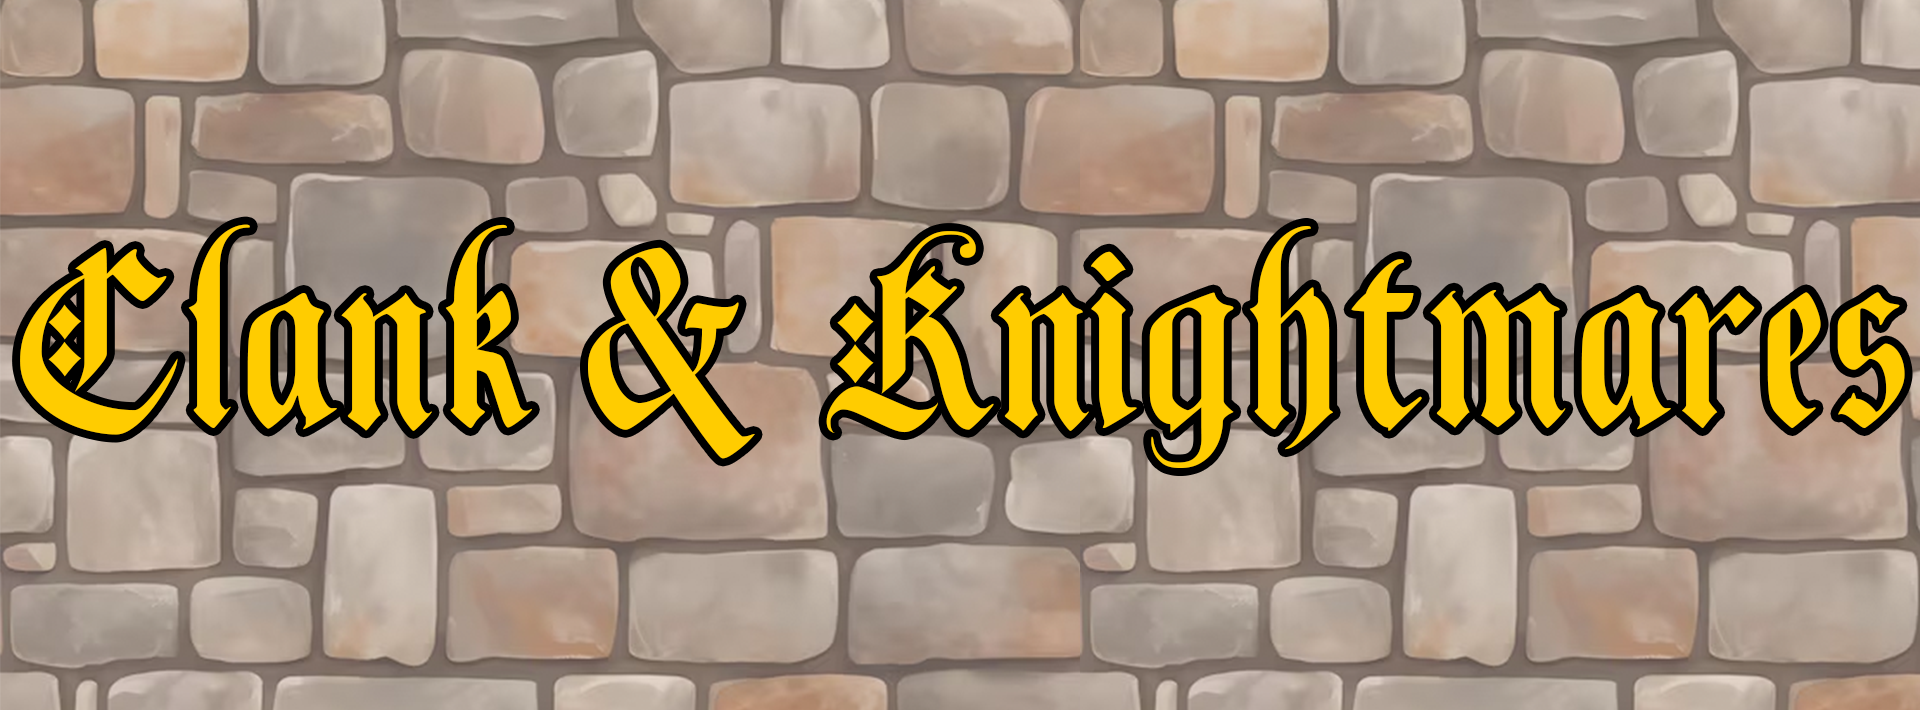 Clank & Knightmares